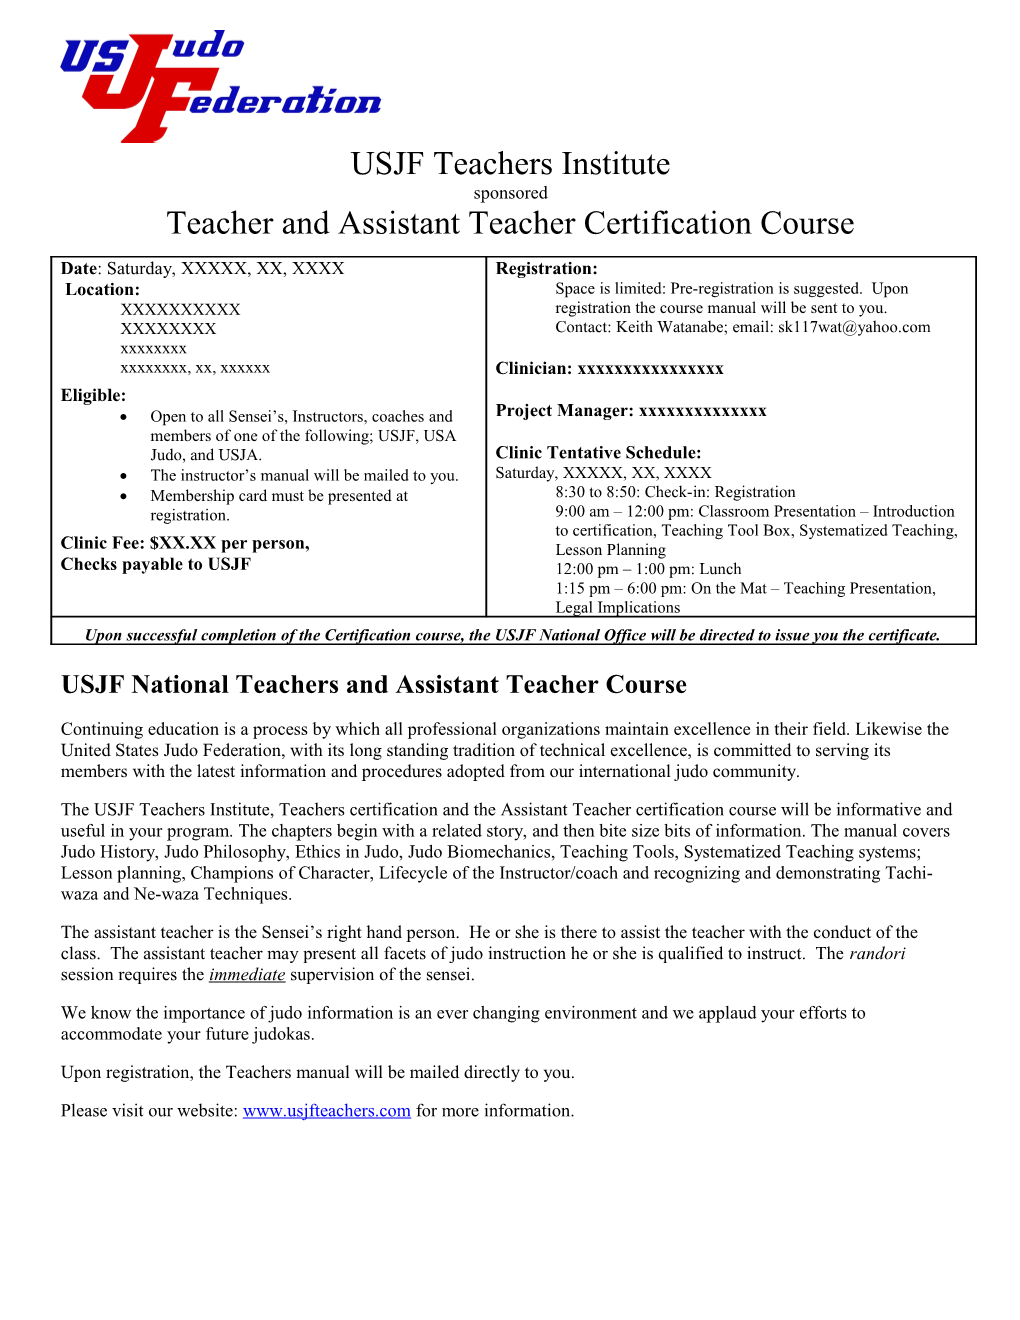 USJF National Teachers and Assistant Teacher Course